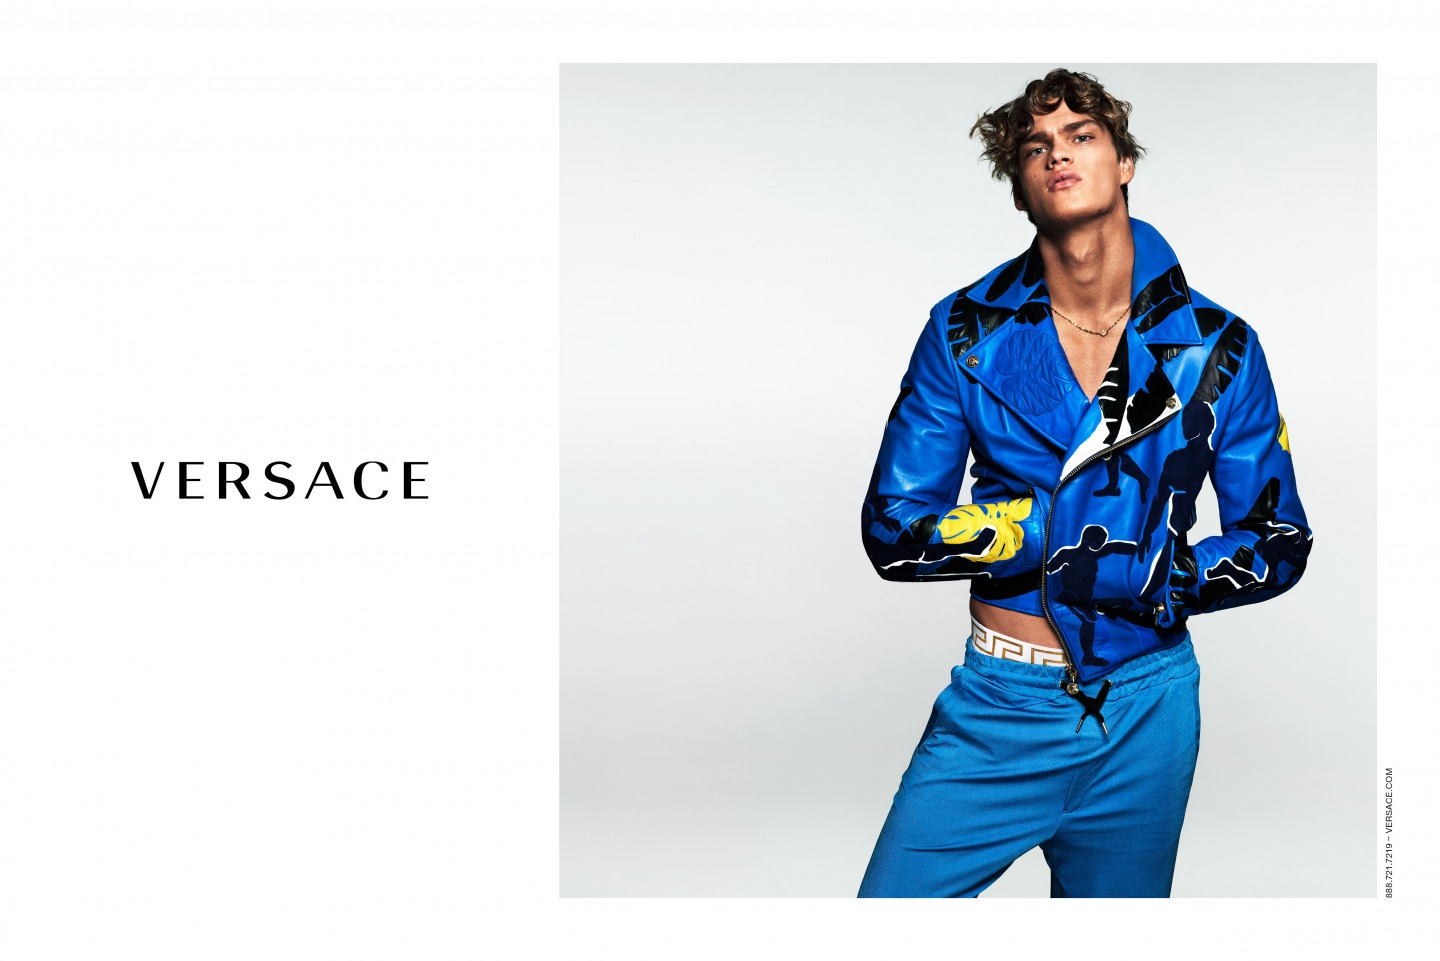 Versace Men's Spring/Summer 2014